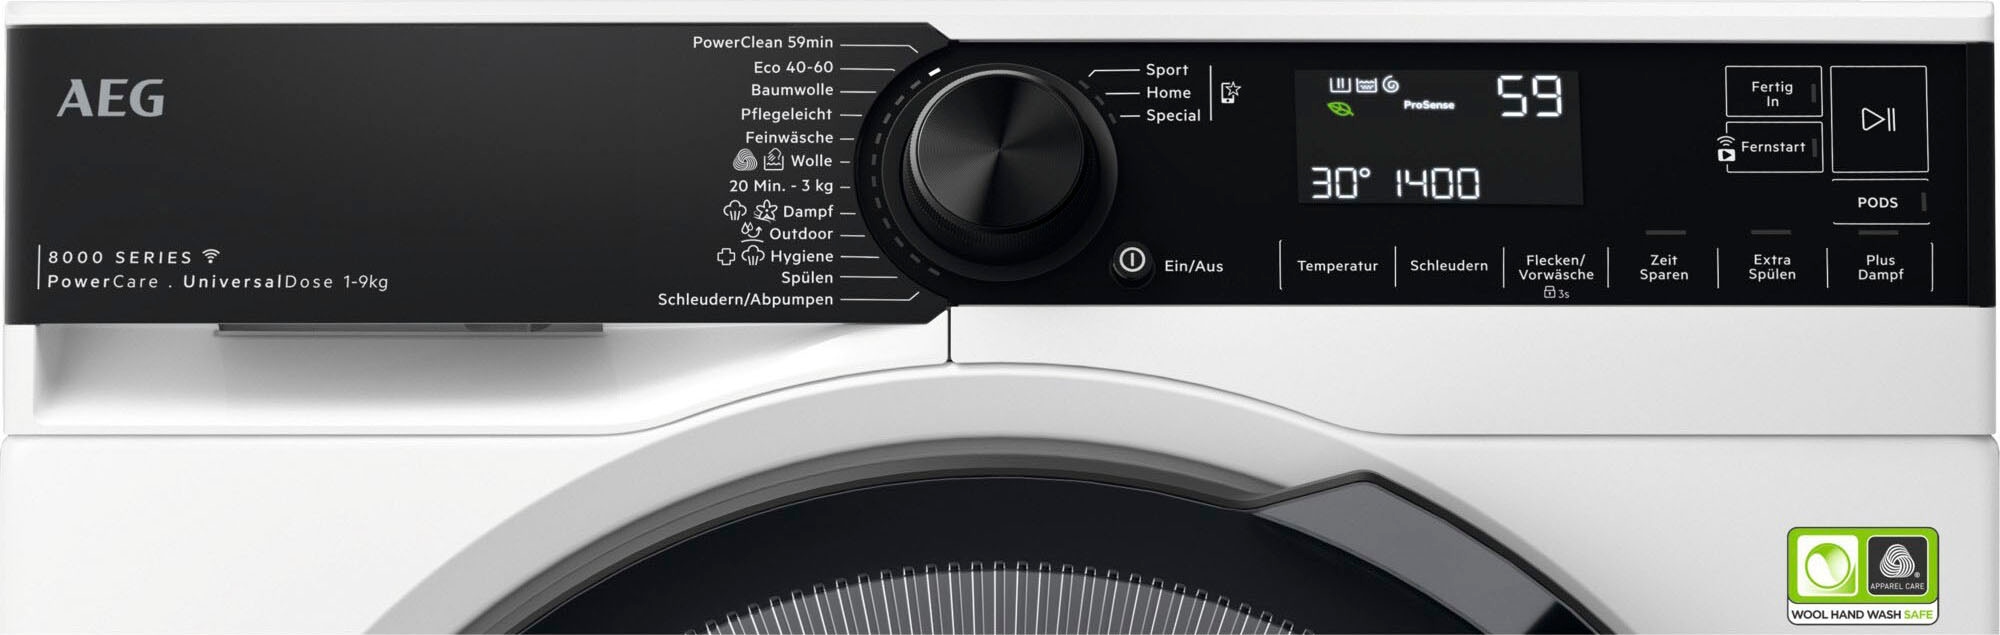 AEG Waschmaschine »LR8E75490«, bei Min. U/min, Wifi 9 8000 & nur OTTO PowerClean 1400 PowerCare, LR8E75490, kg, Fleckenentfernung online in 30 °C bei 59 